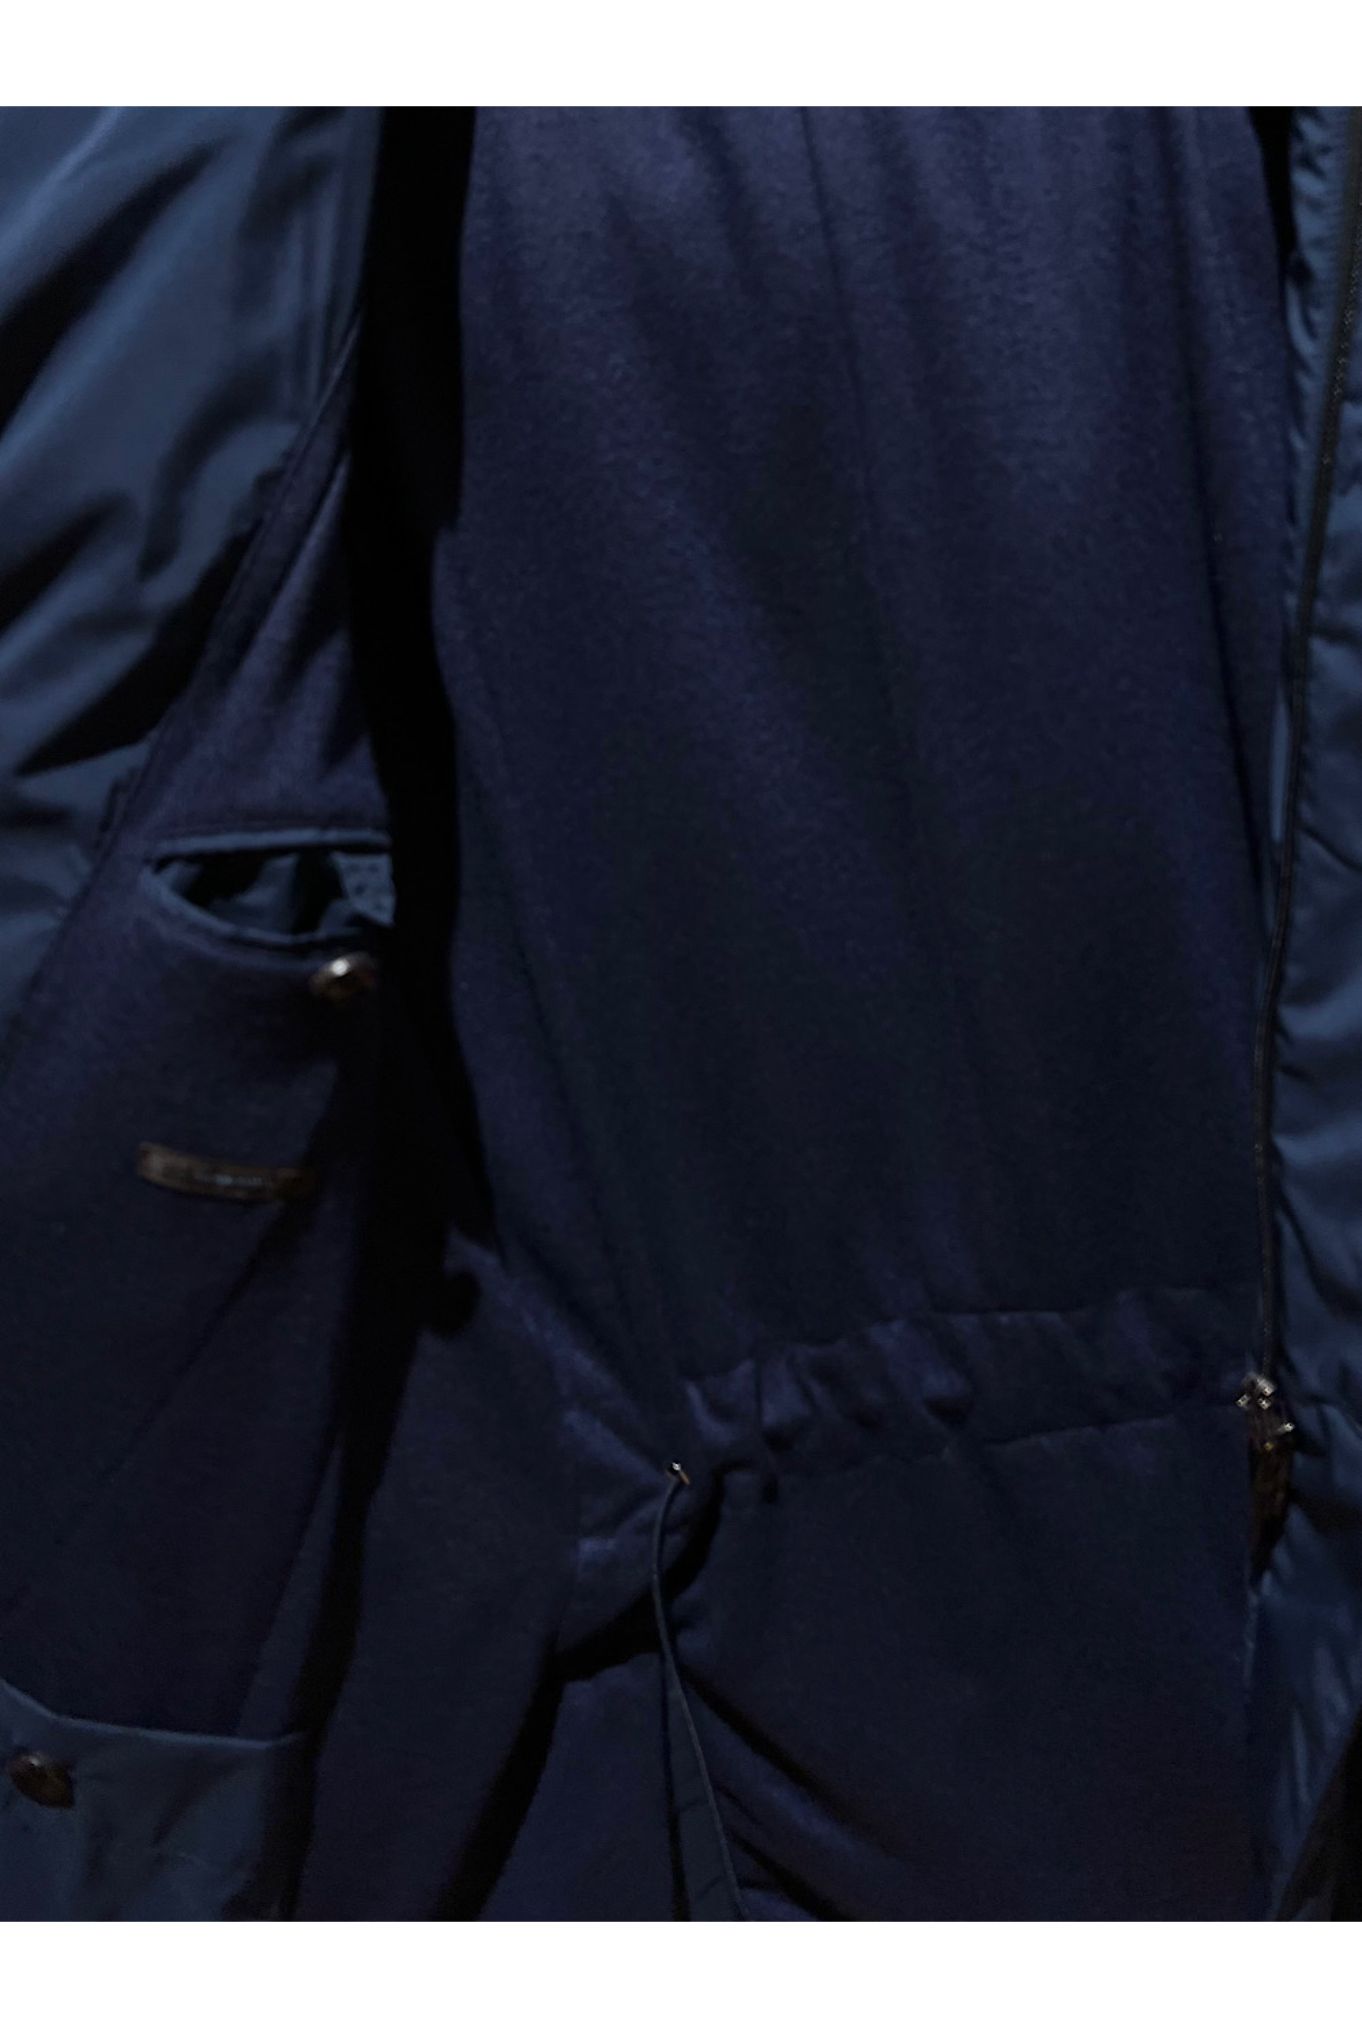 Colombo Blue Cashmere Lined Jacket